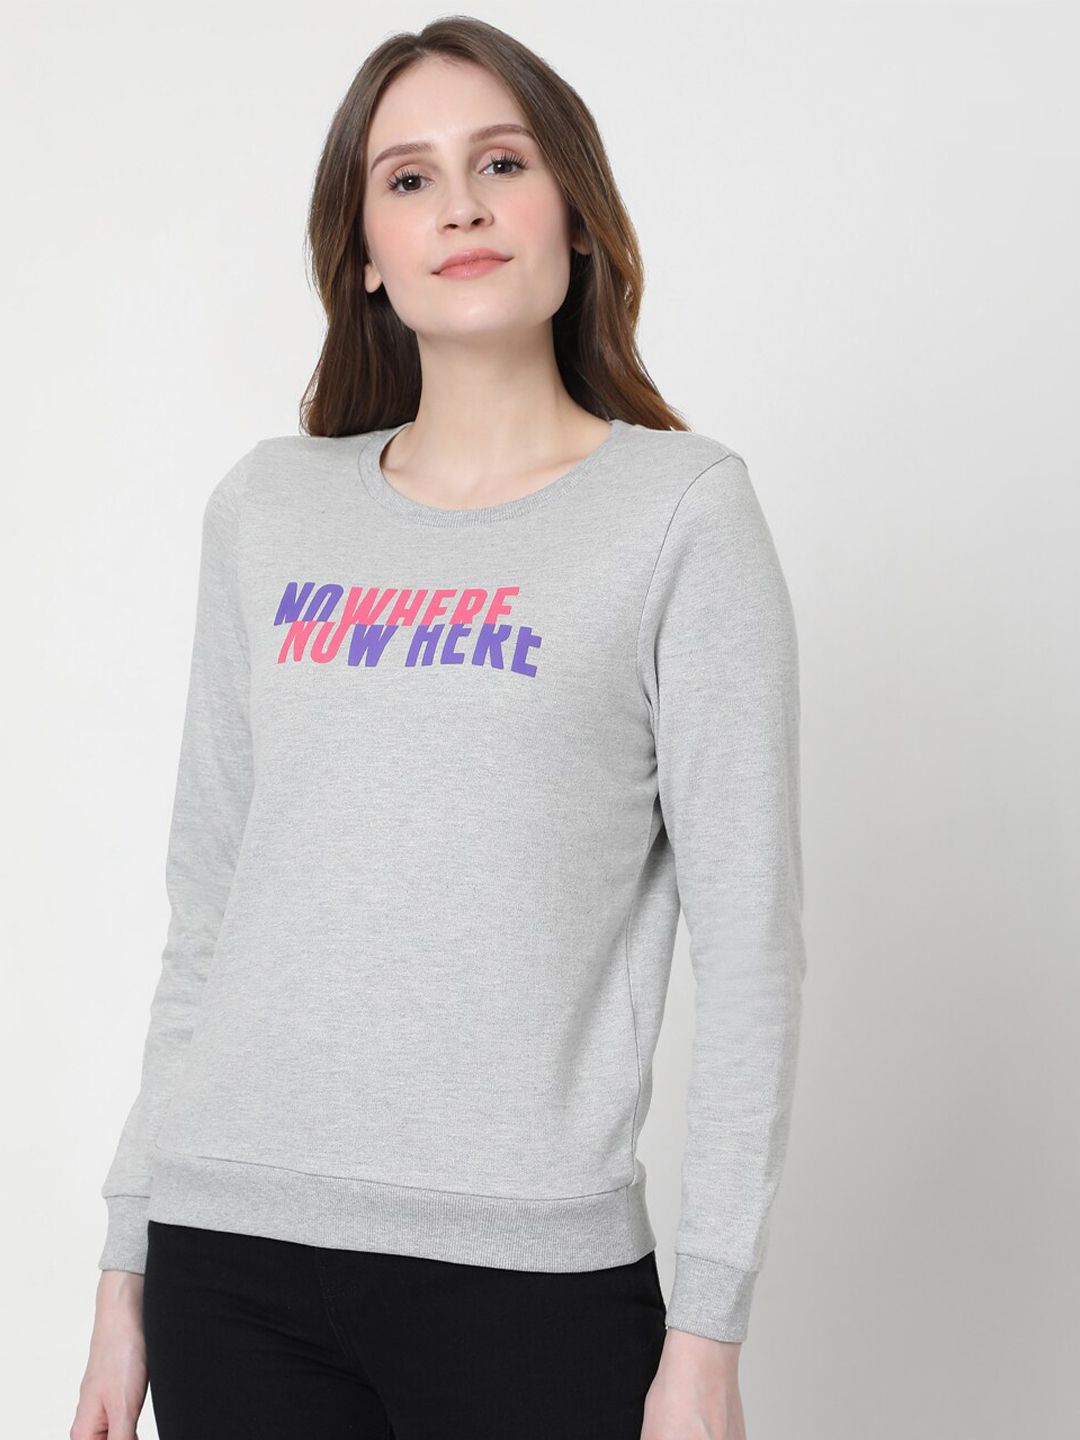 Vero Moda Women Grey Printed Sweatshirt Price in India